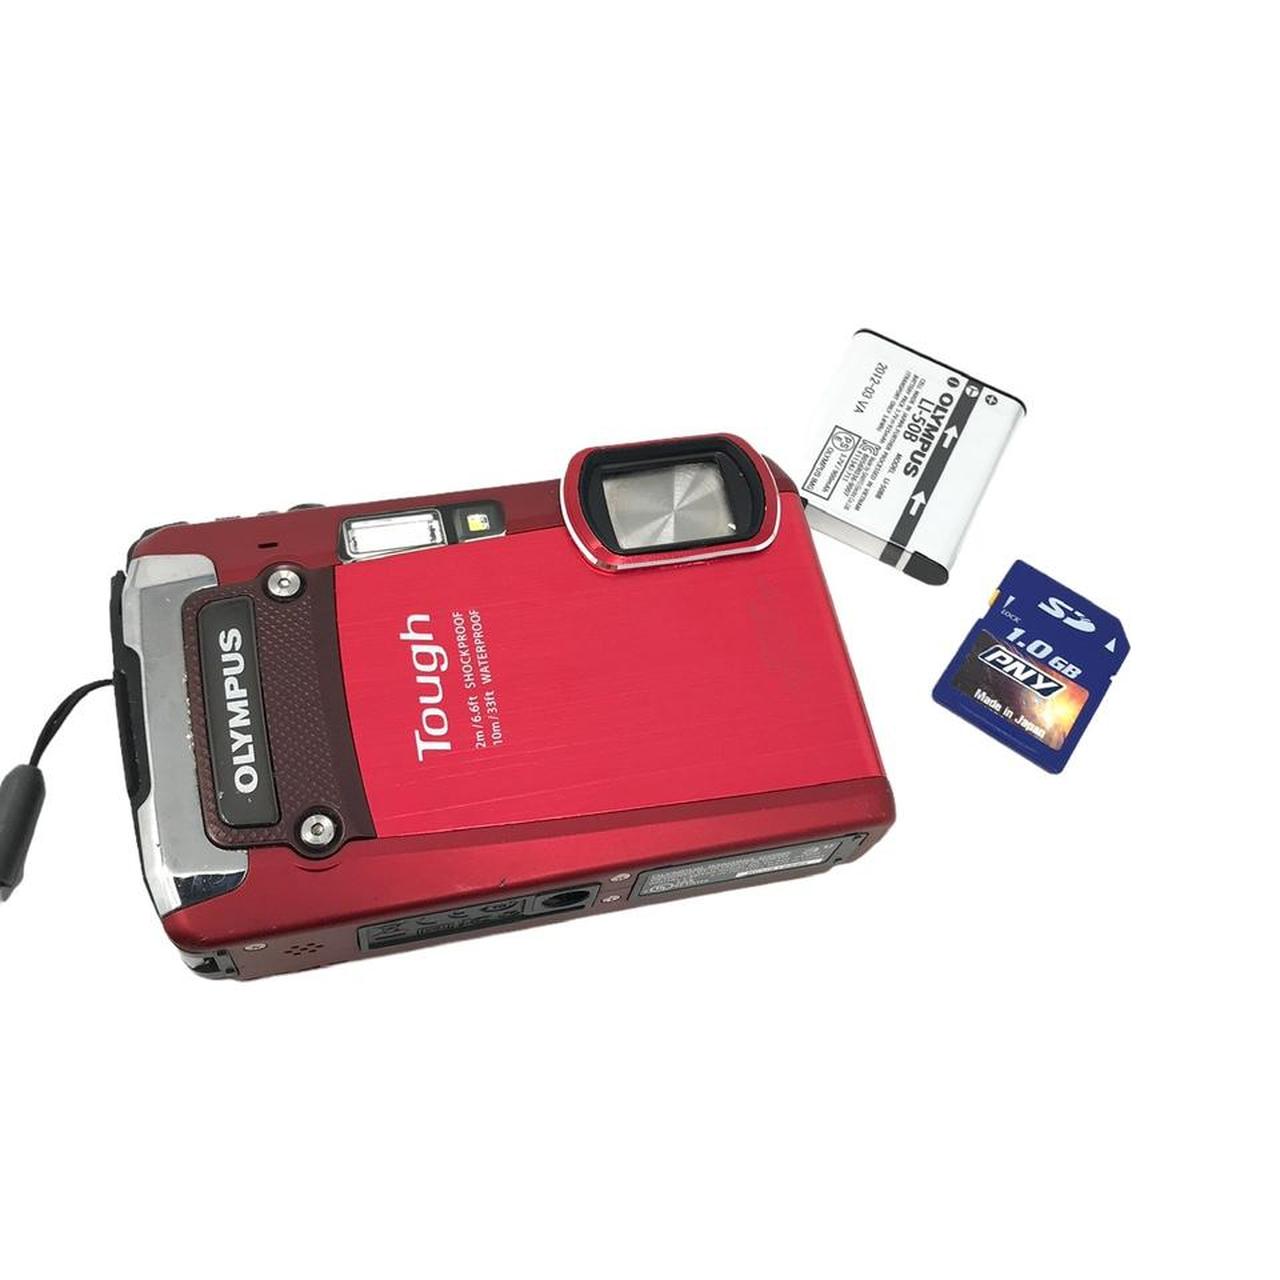 Product Image 4 - Olympus TG-820 Tough Digital Camera

Comes